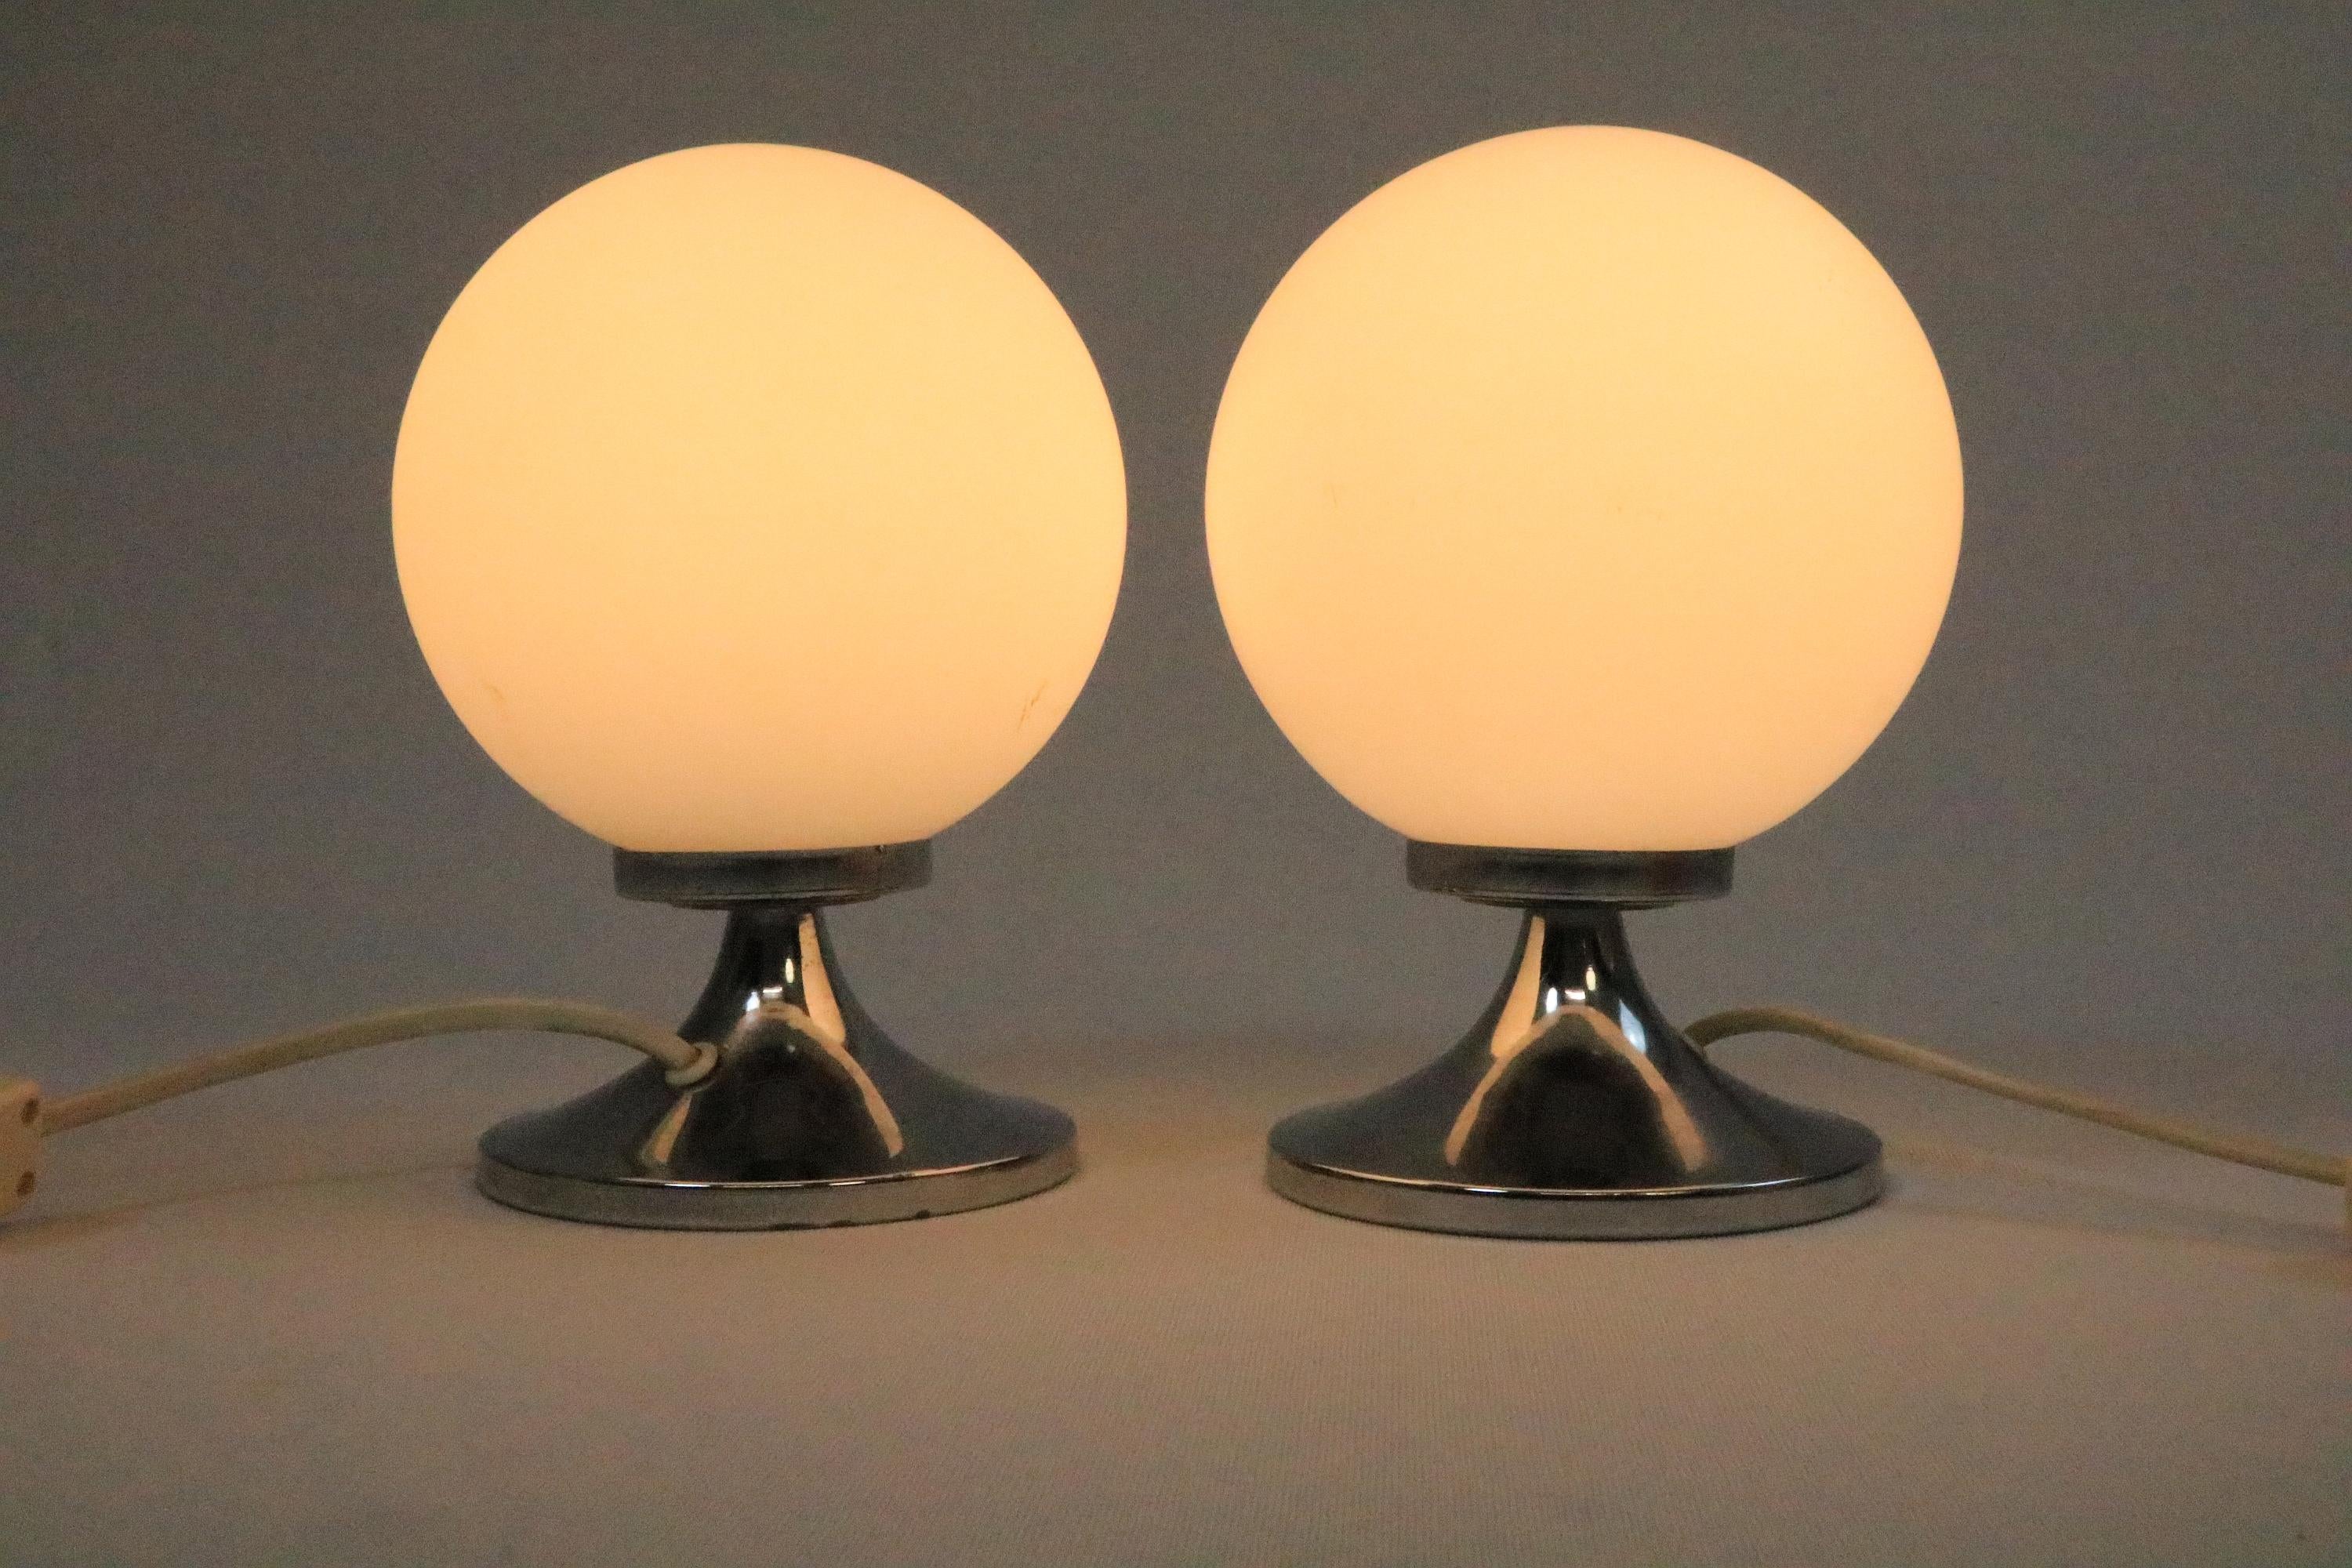 German Set of 2 Small Table Lamps, Glass Ball, Tulip Base, Original 1970s